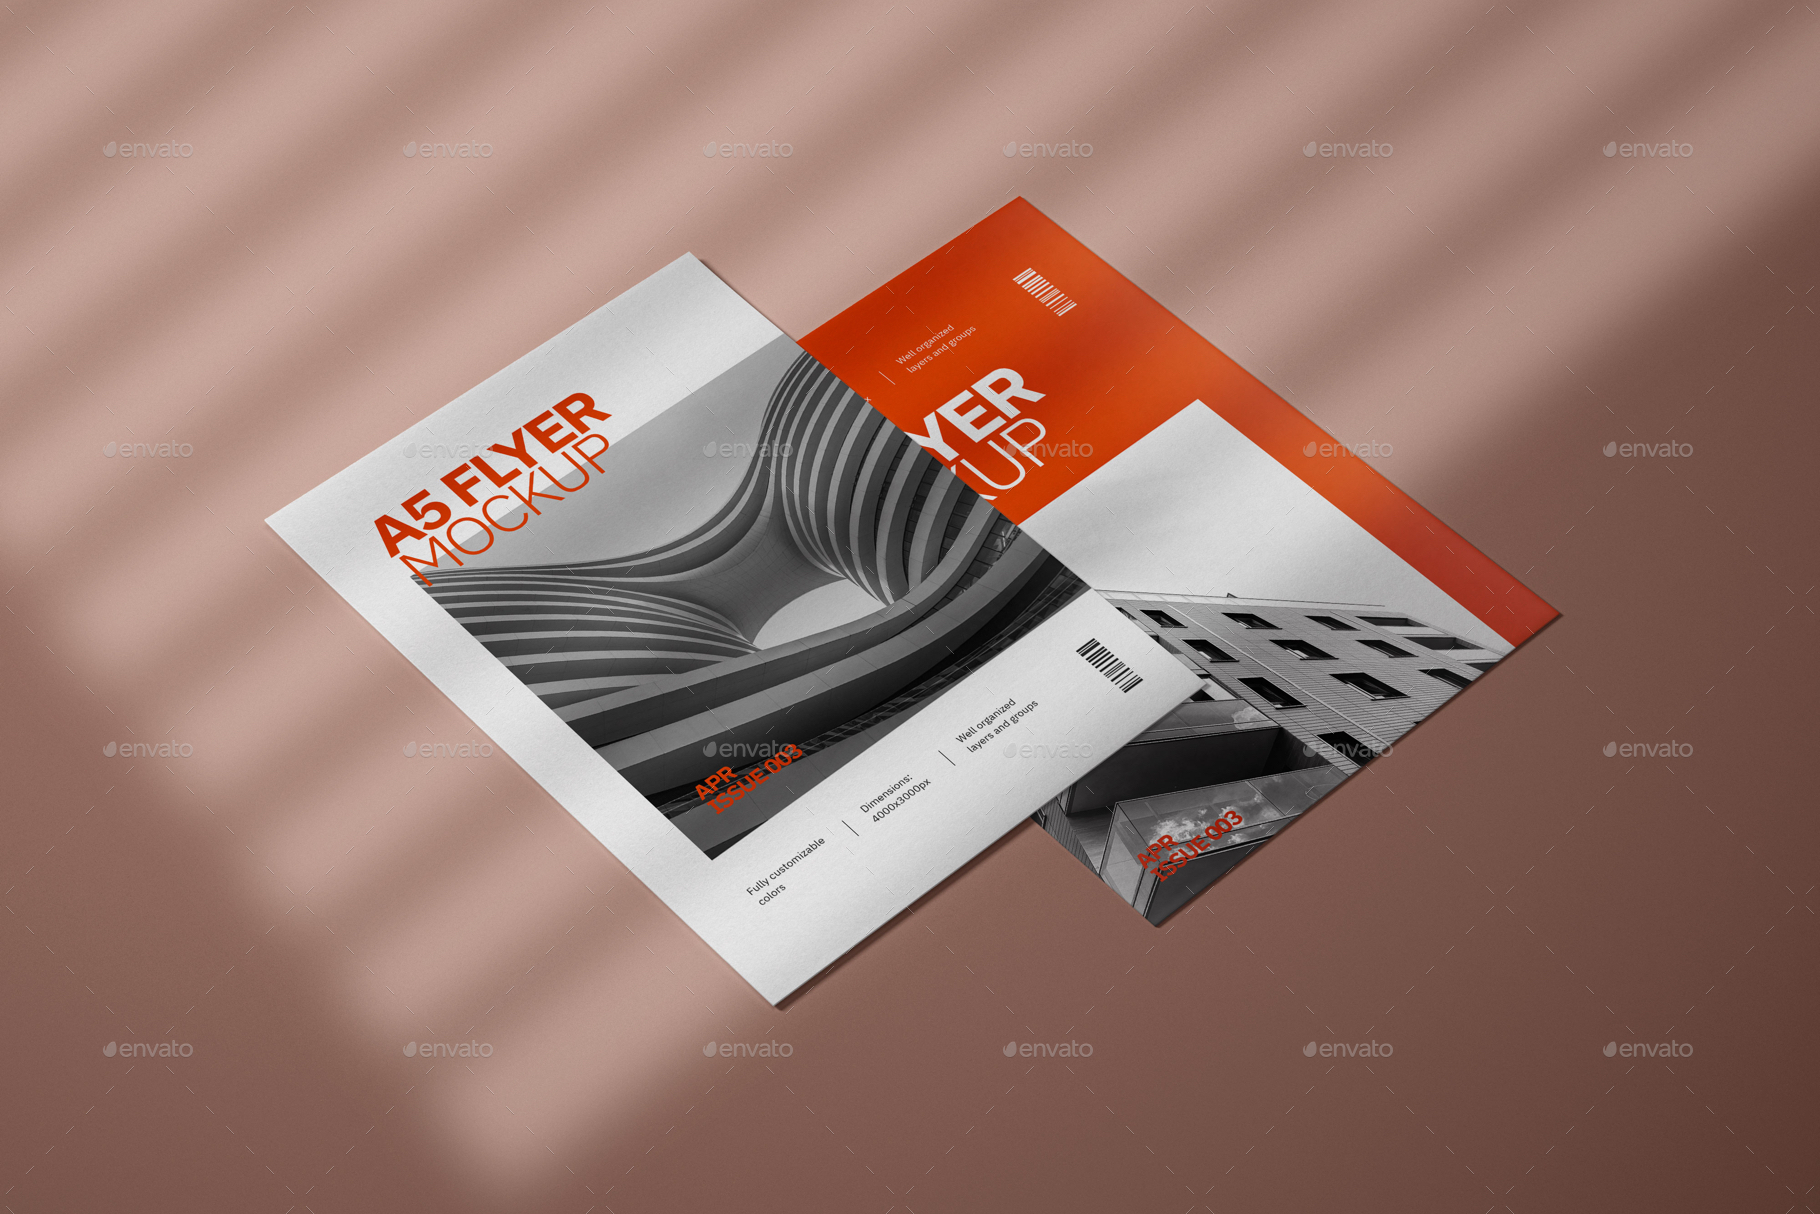 Download A5 Flyer Mockup Set by deeplabstudio | GraphicRiver